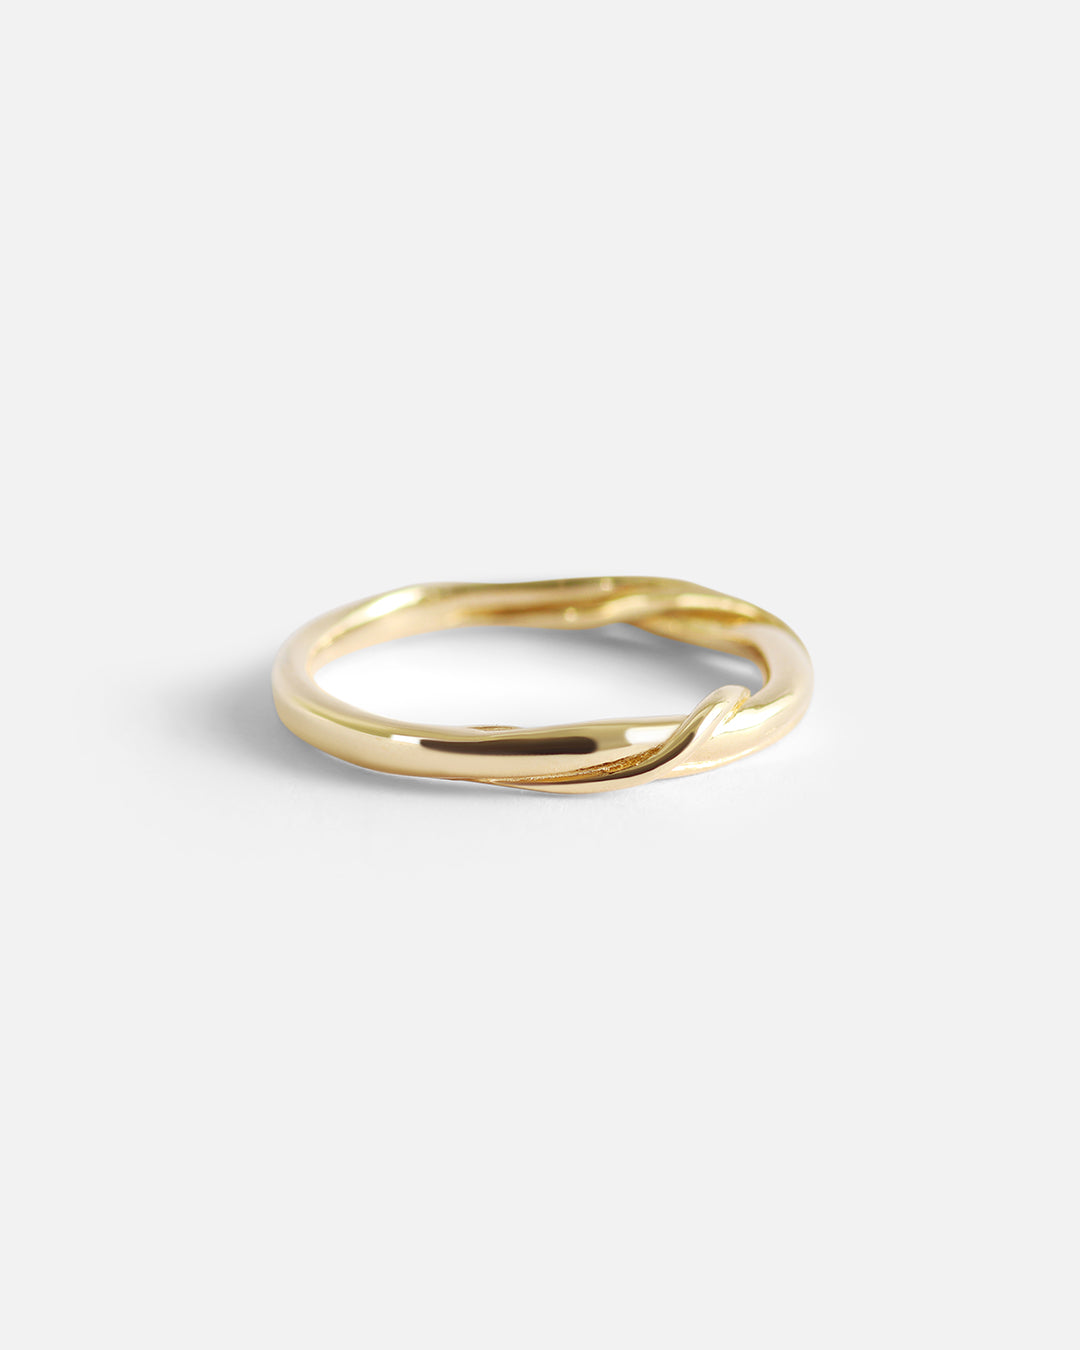 Aragon / Ring By Alfonzo